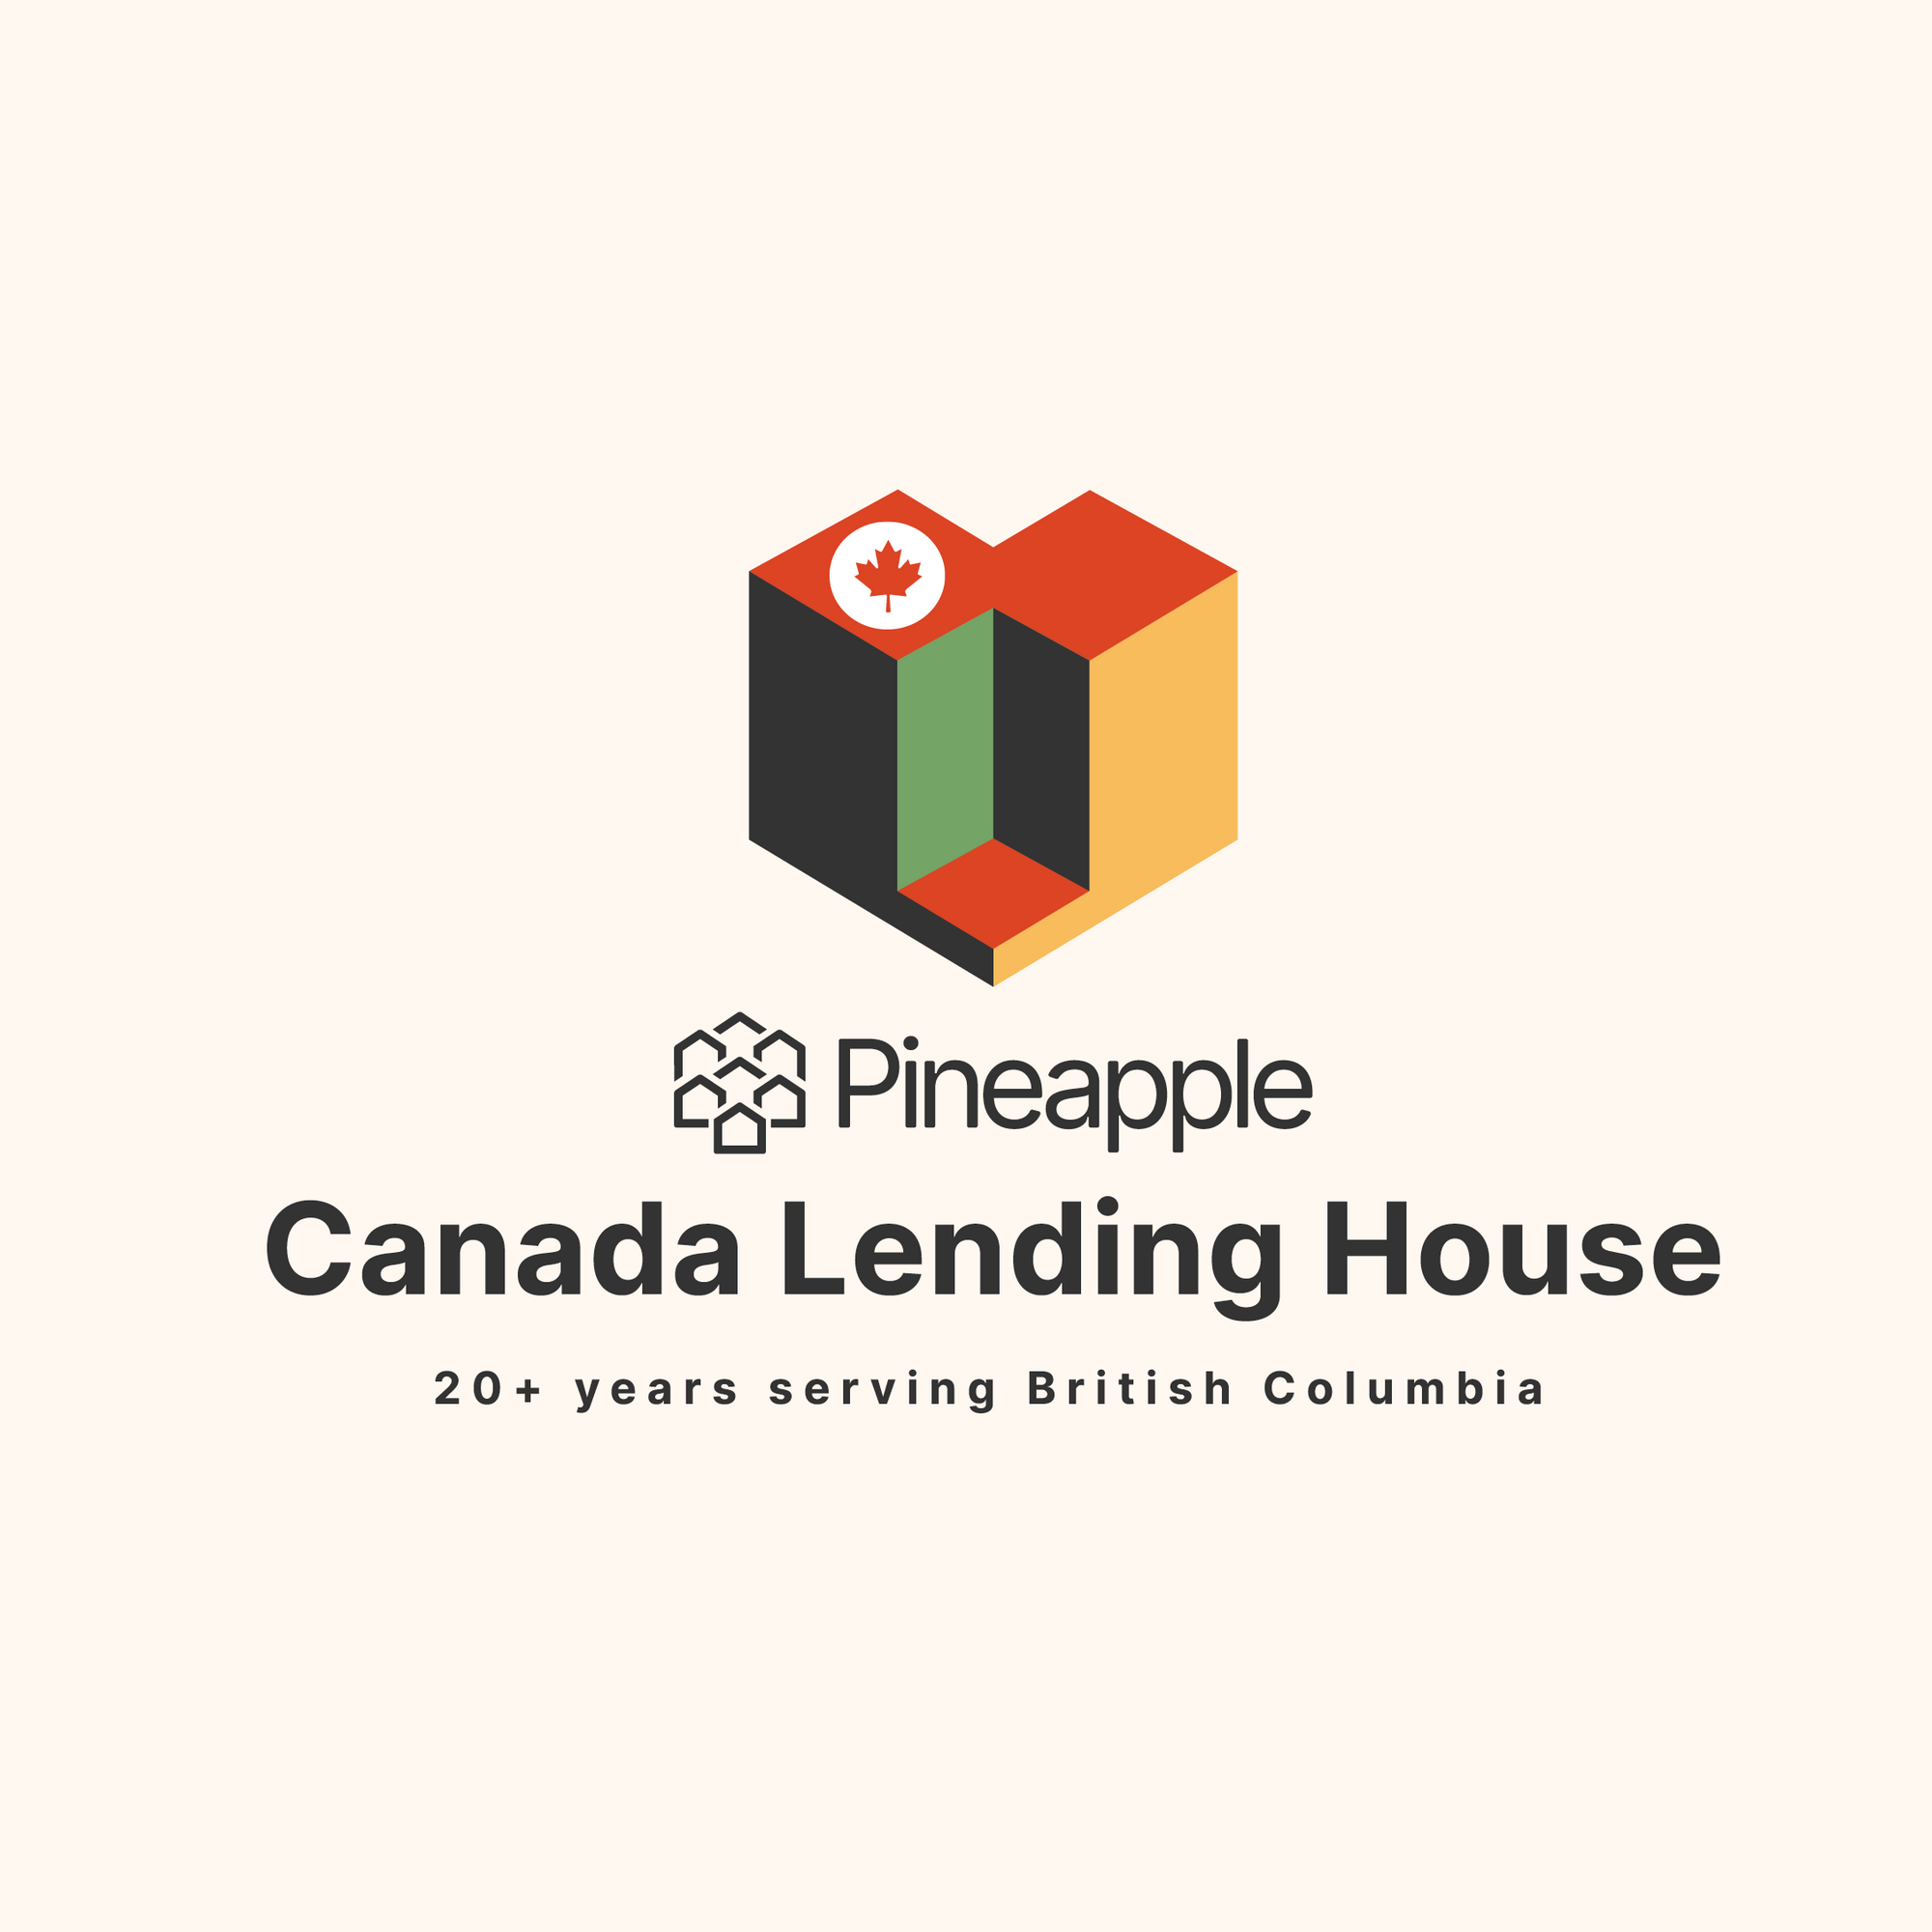 Canadian Lending House